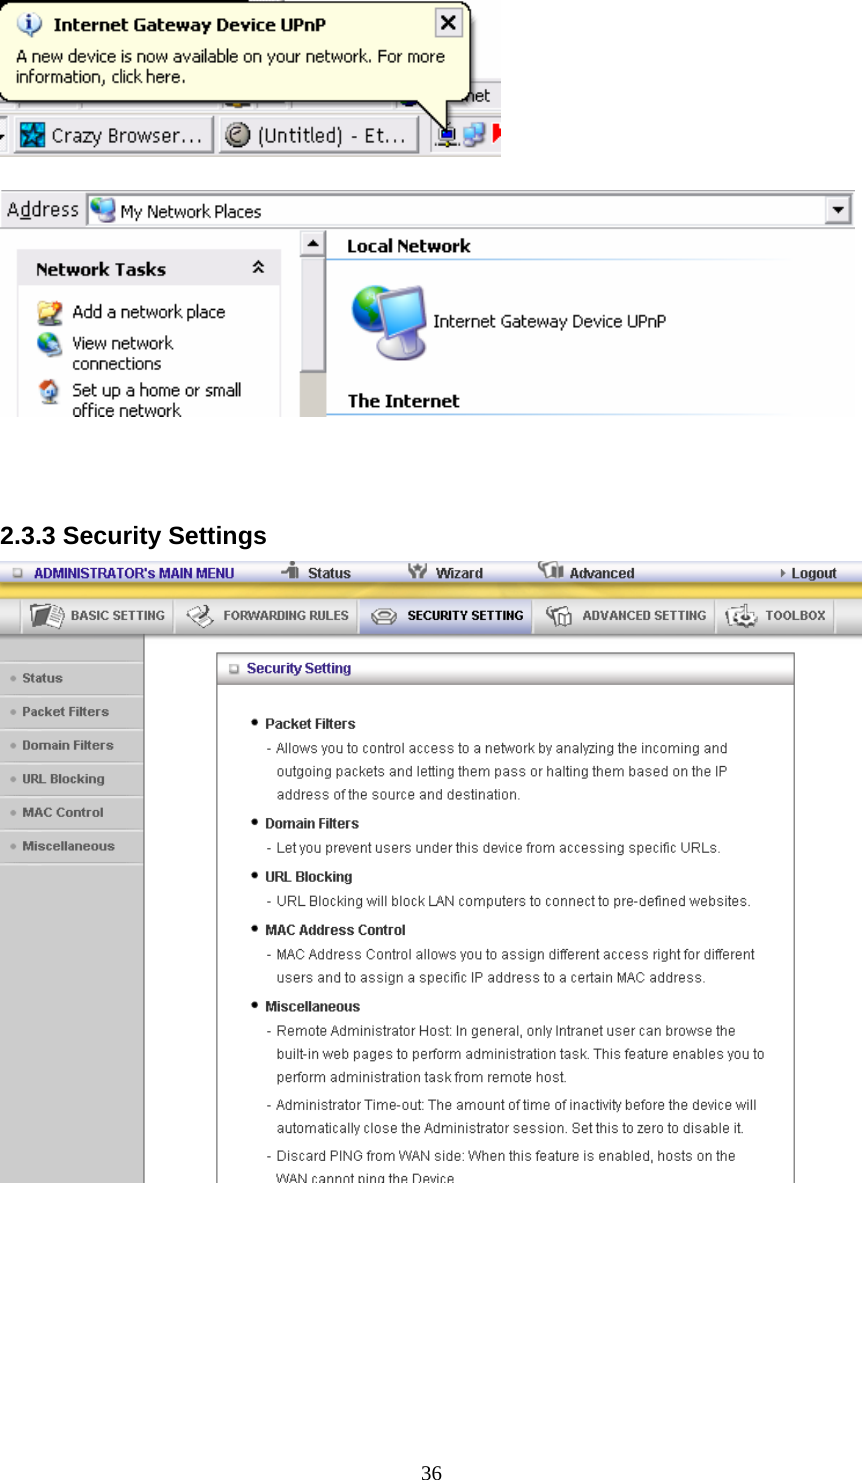  36    2.3.3 Security Settings        